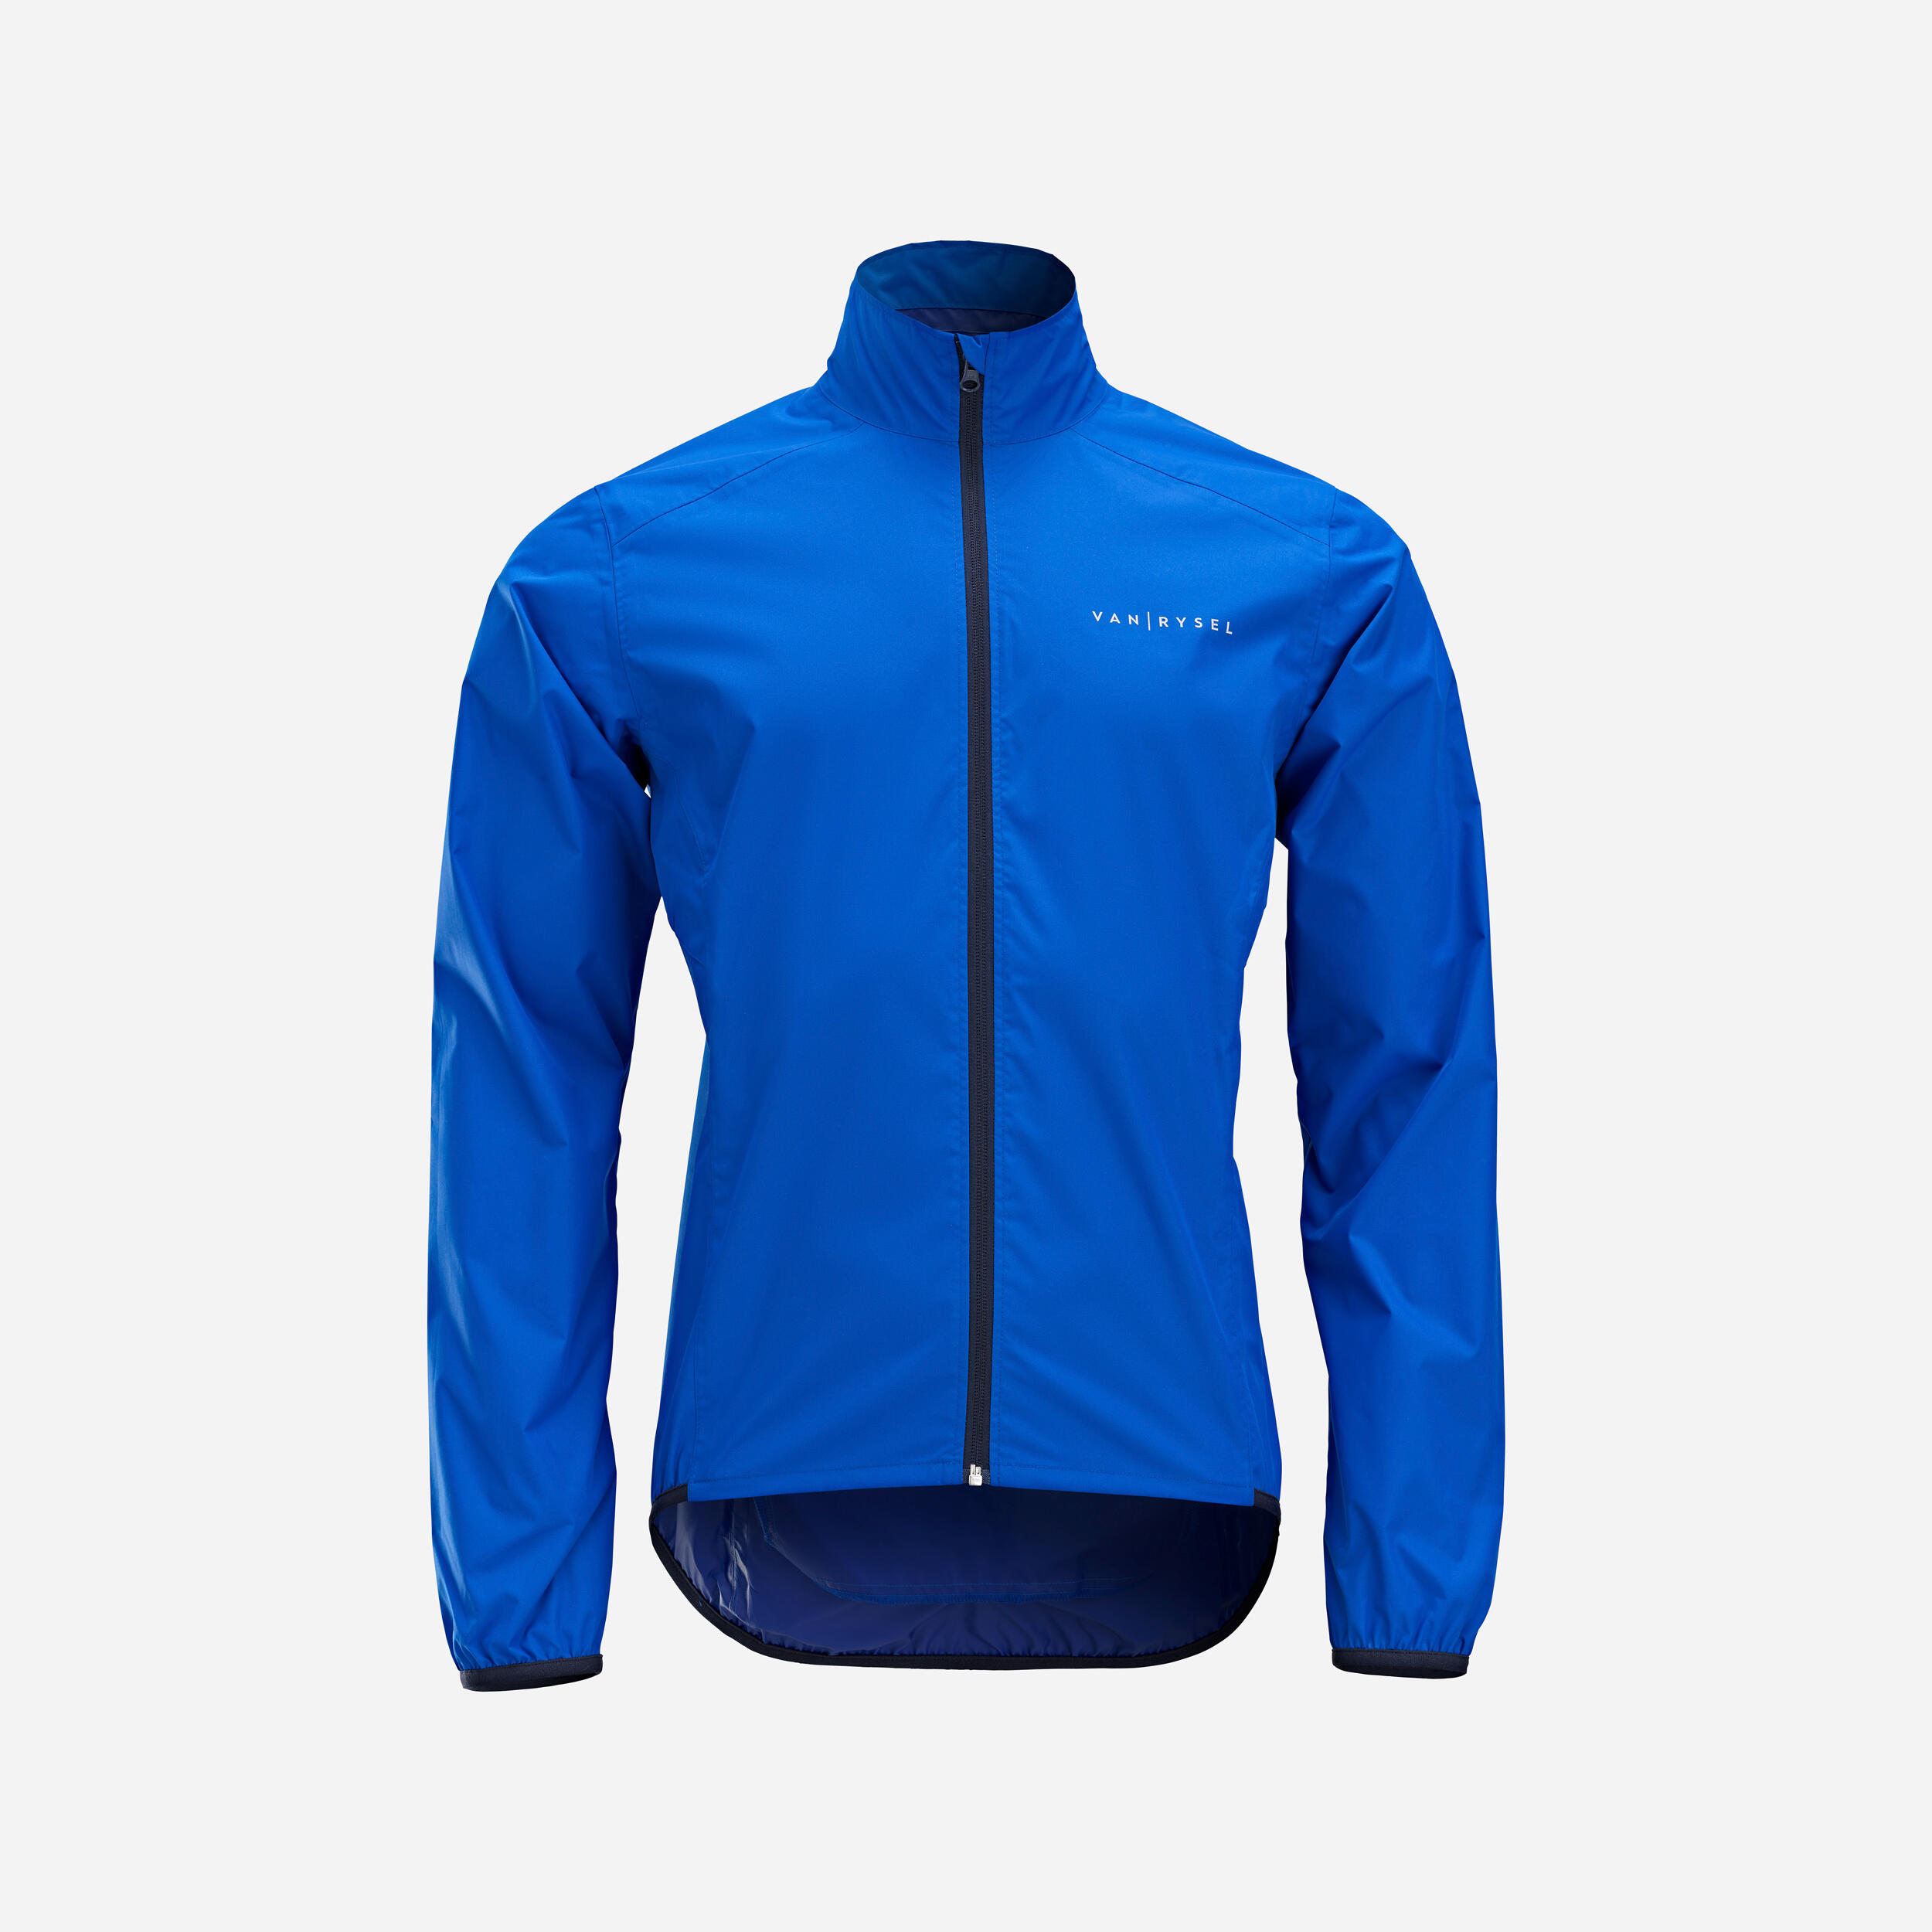 Men's Long-Sleeved Road Cycling Rain Jacket RC100 - Indigo Blue TRIBAN